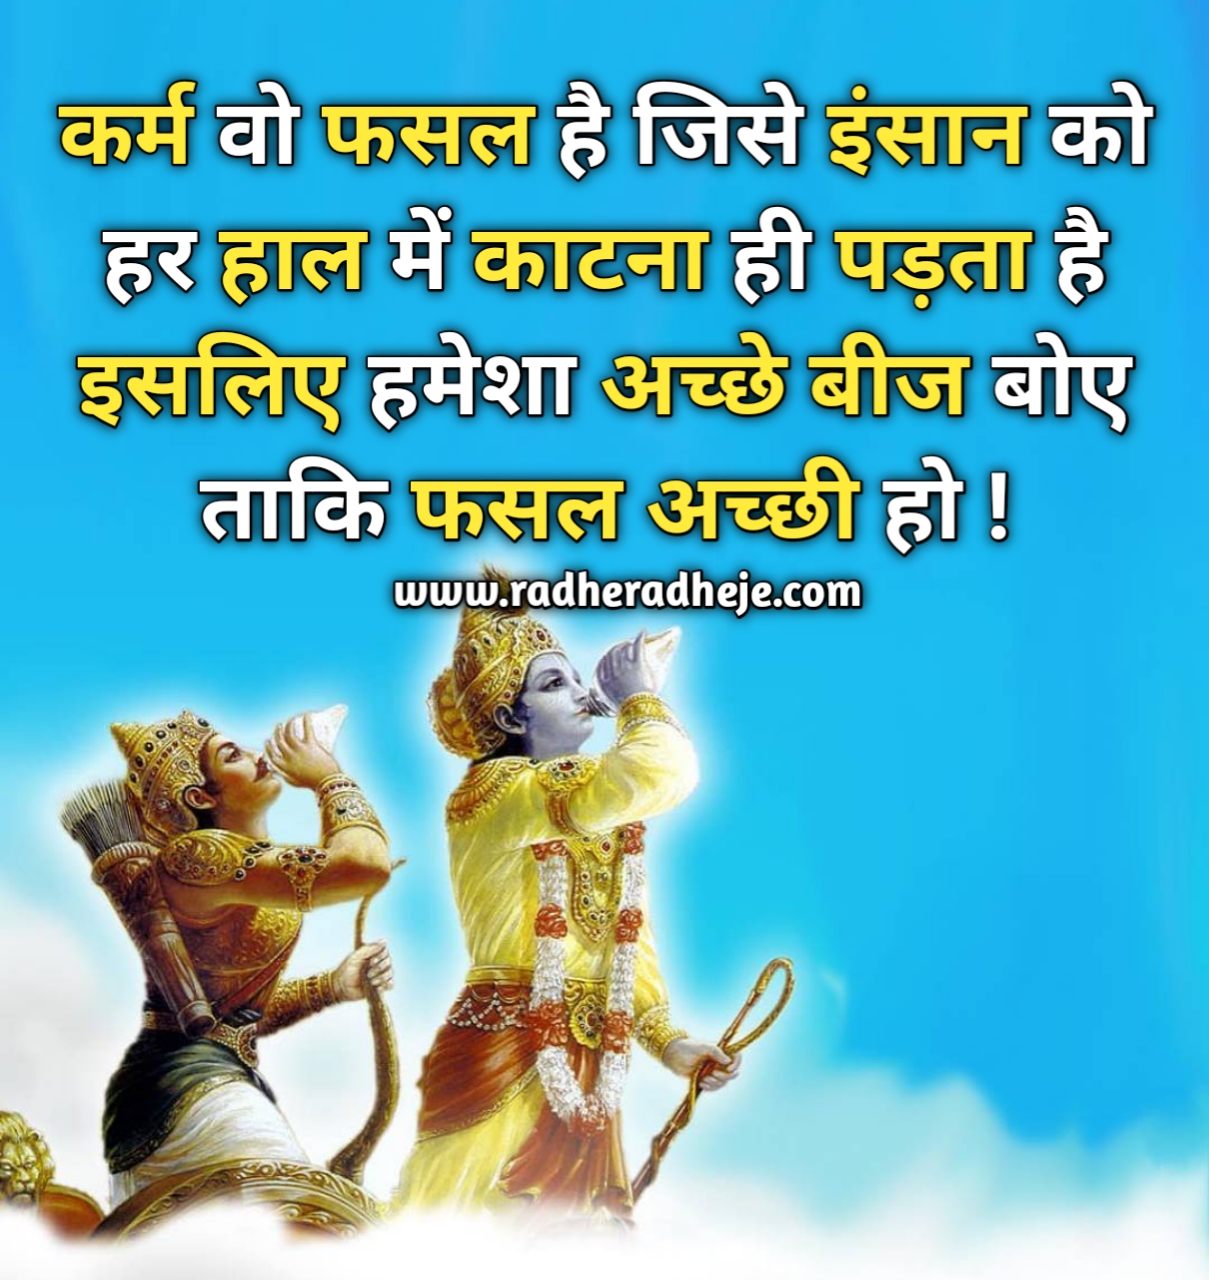 Lord Krishna Quotes Motivational Quotes In Hindi And Bhagavad Gita Quotes - Radheradheje